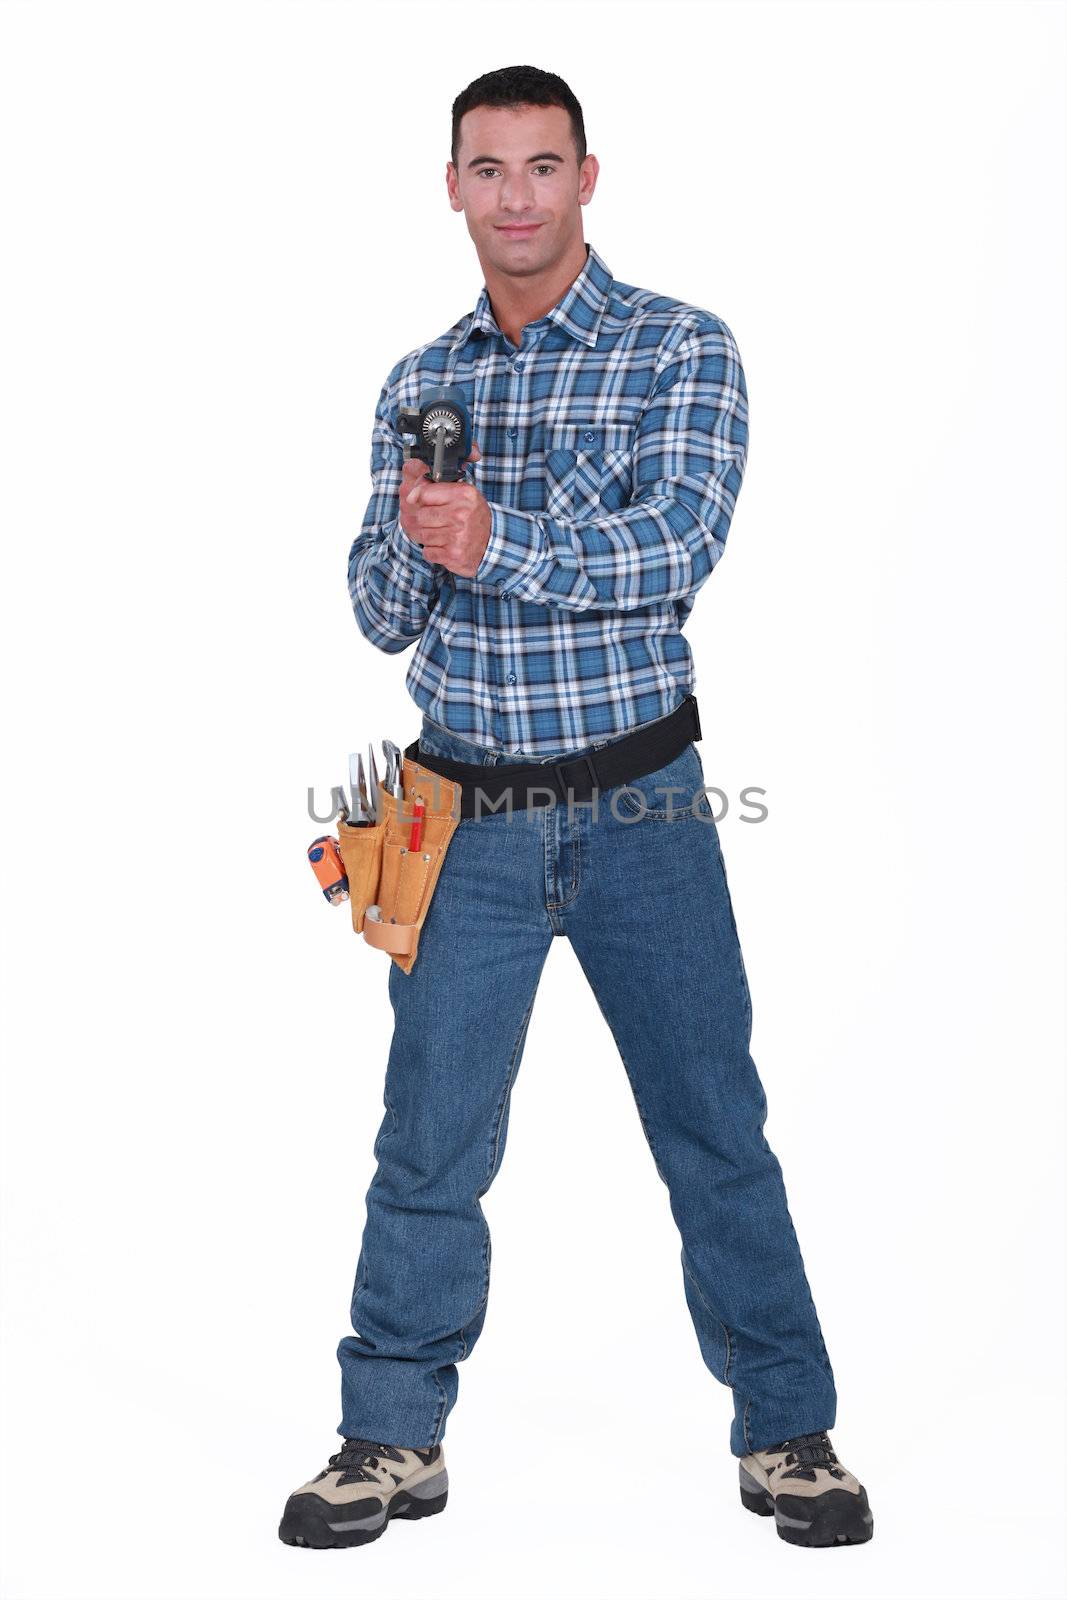 Handyman holding a cordless powerdrill